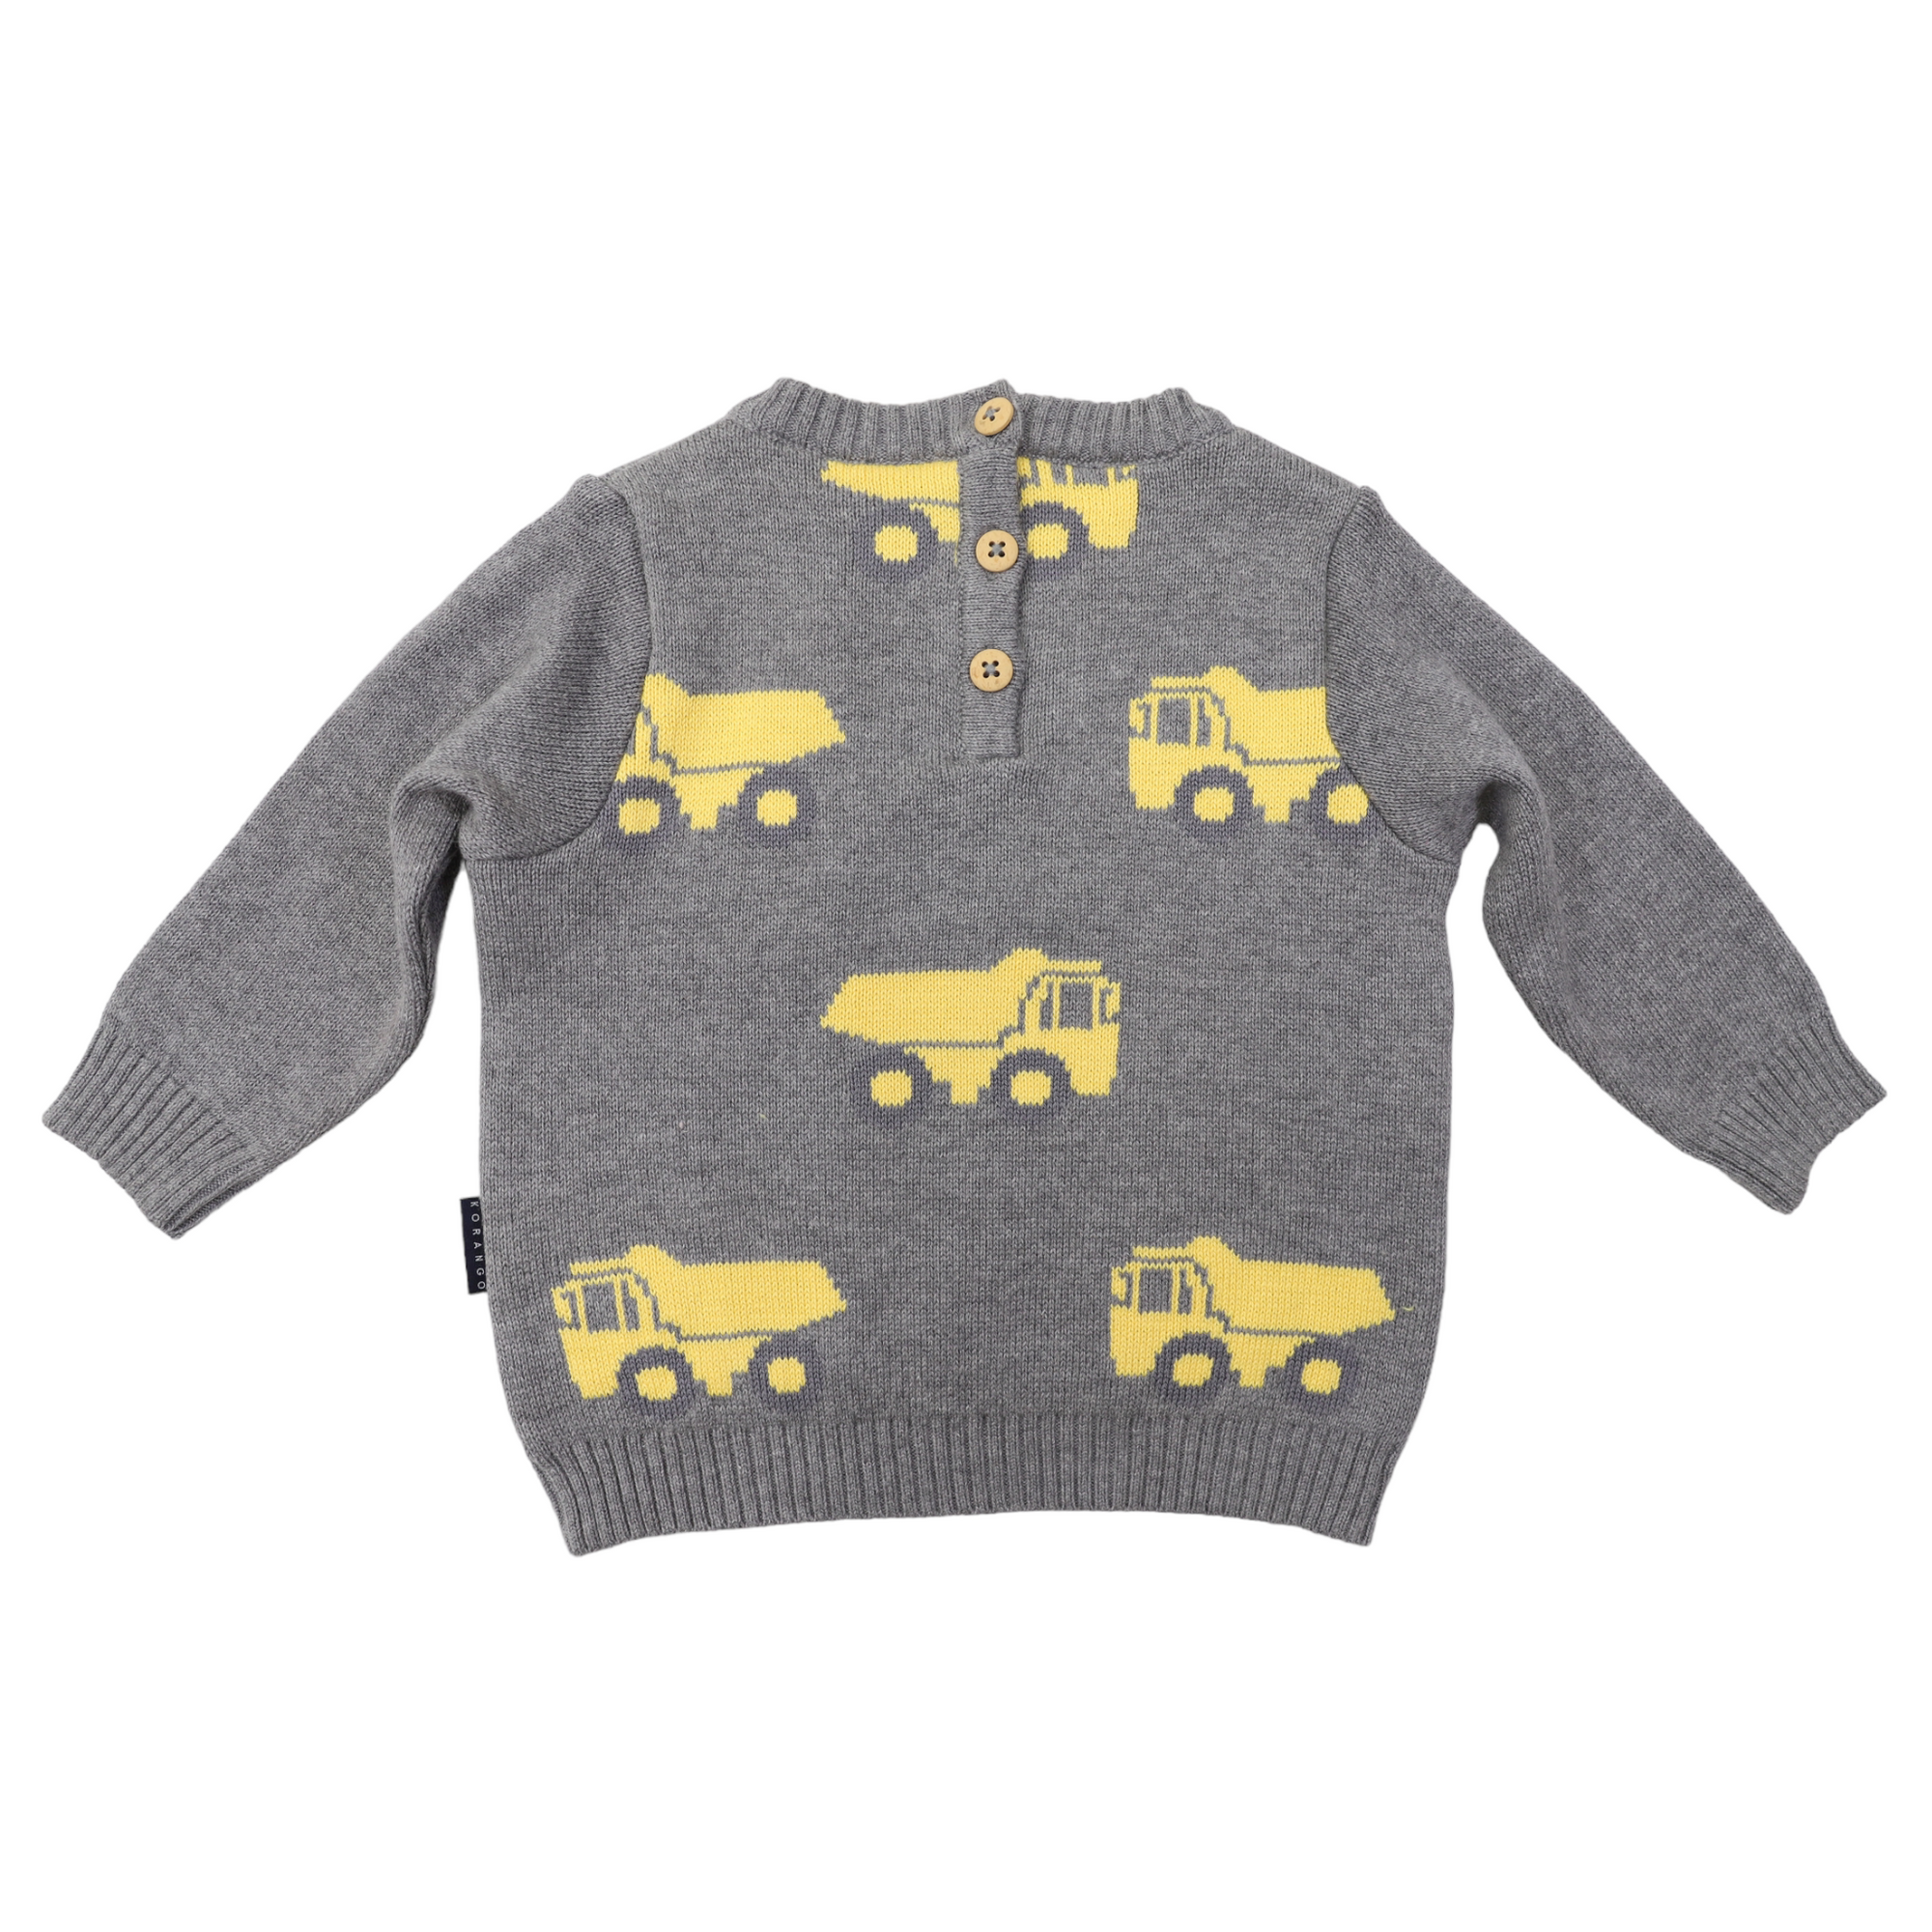 Korango Tip Truck Knit Sweater - Charcoal